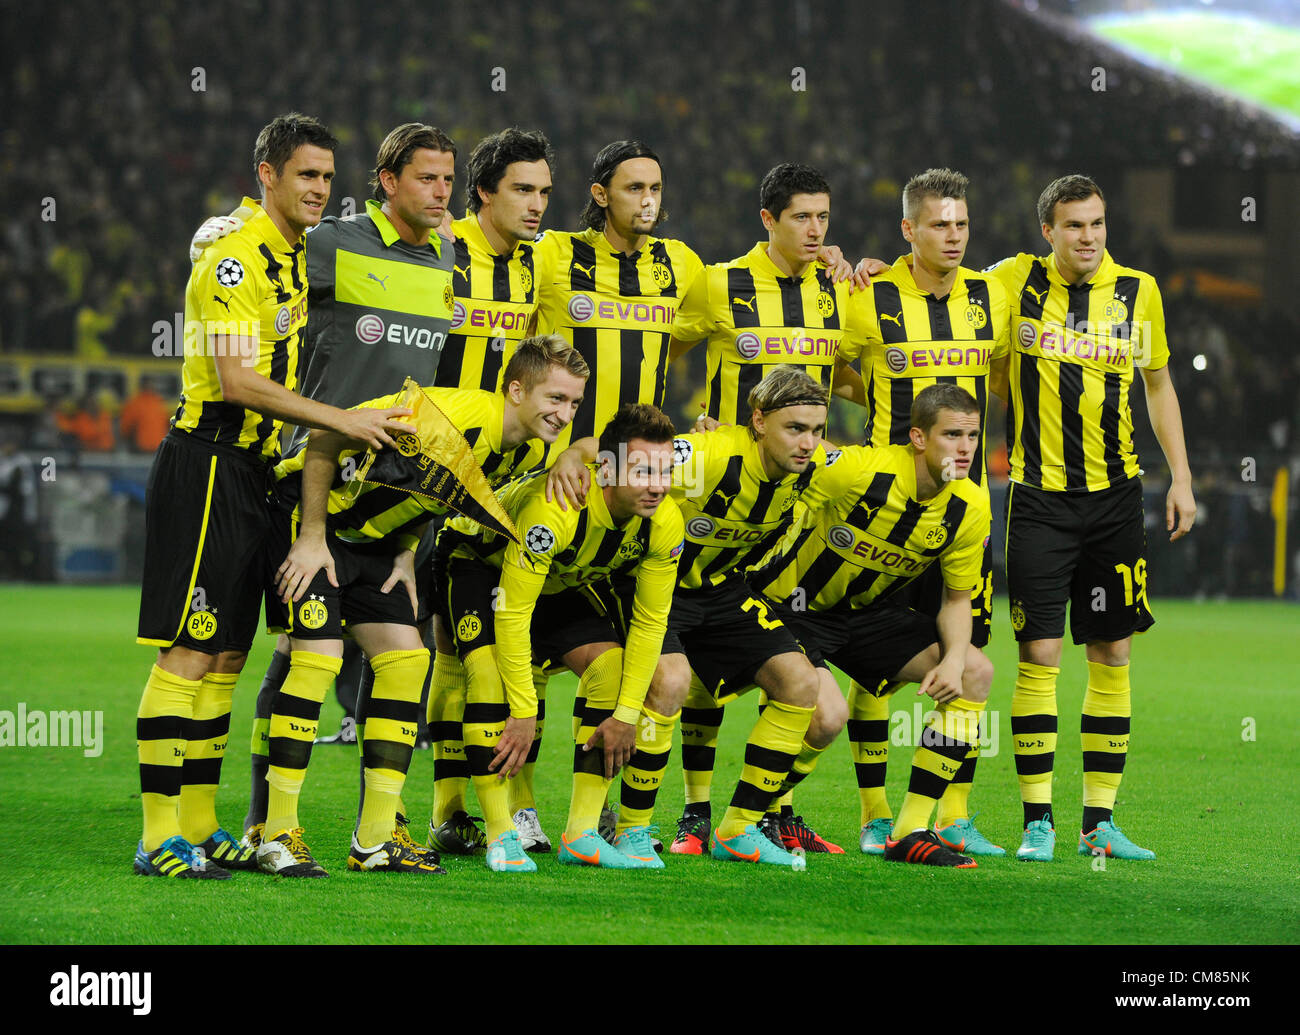 Dortmund, Germany. 24.10.2012,Football Champions League Group Phase 3rd matchday, Borussia Dortmund - Real Madrid -----  Team photo Dortmund, back row from left.: Sebastian Kehl (BVB),Torwart Roman Weidenfeller (BVB),Mats Hummels (BVB),Neven Subotic (BVB),Robert Lewandowski (BVB),Lukasz Piszczek (BVB),Kevin Großkreutz (Grosskreutz) (BVB); front row from left.:Marco Reus (BVB),Mario Götze (Goetze) (BVB), Marcel Schmelzer (BVB),Sven Bender Stock Photo